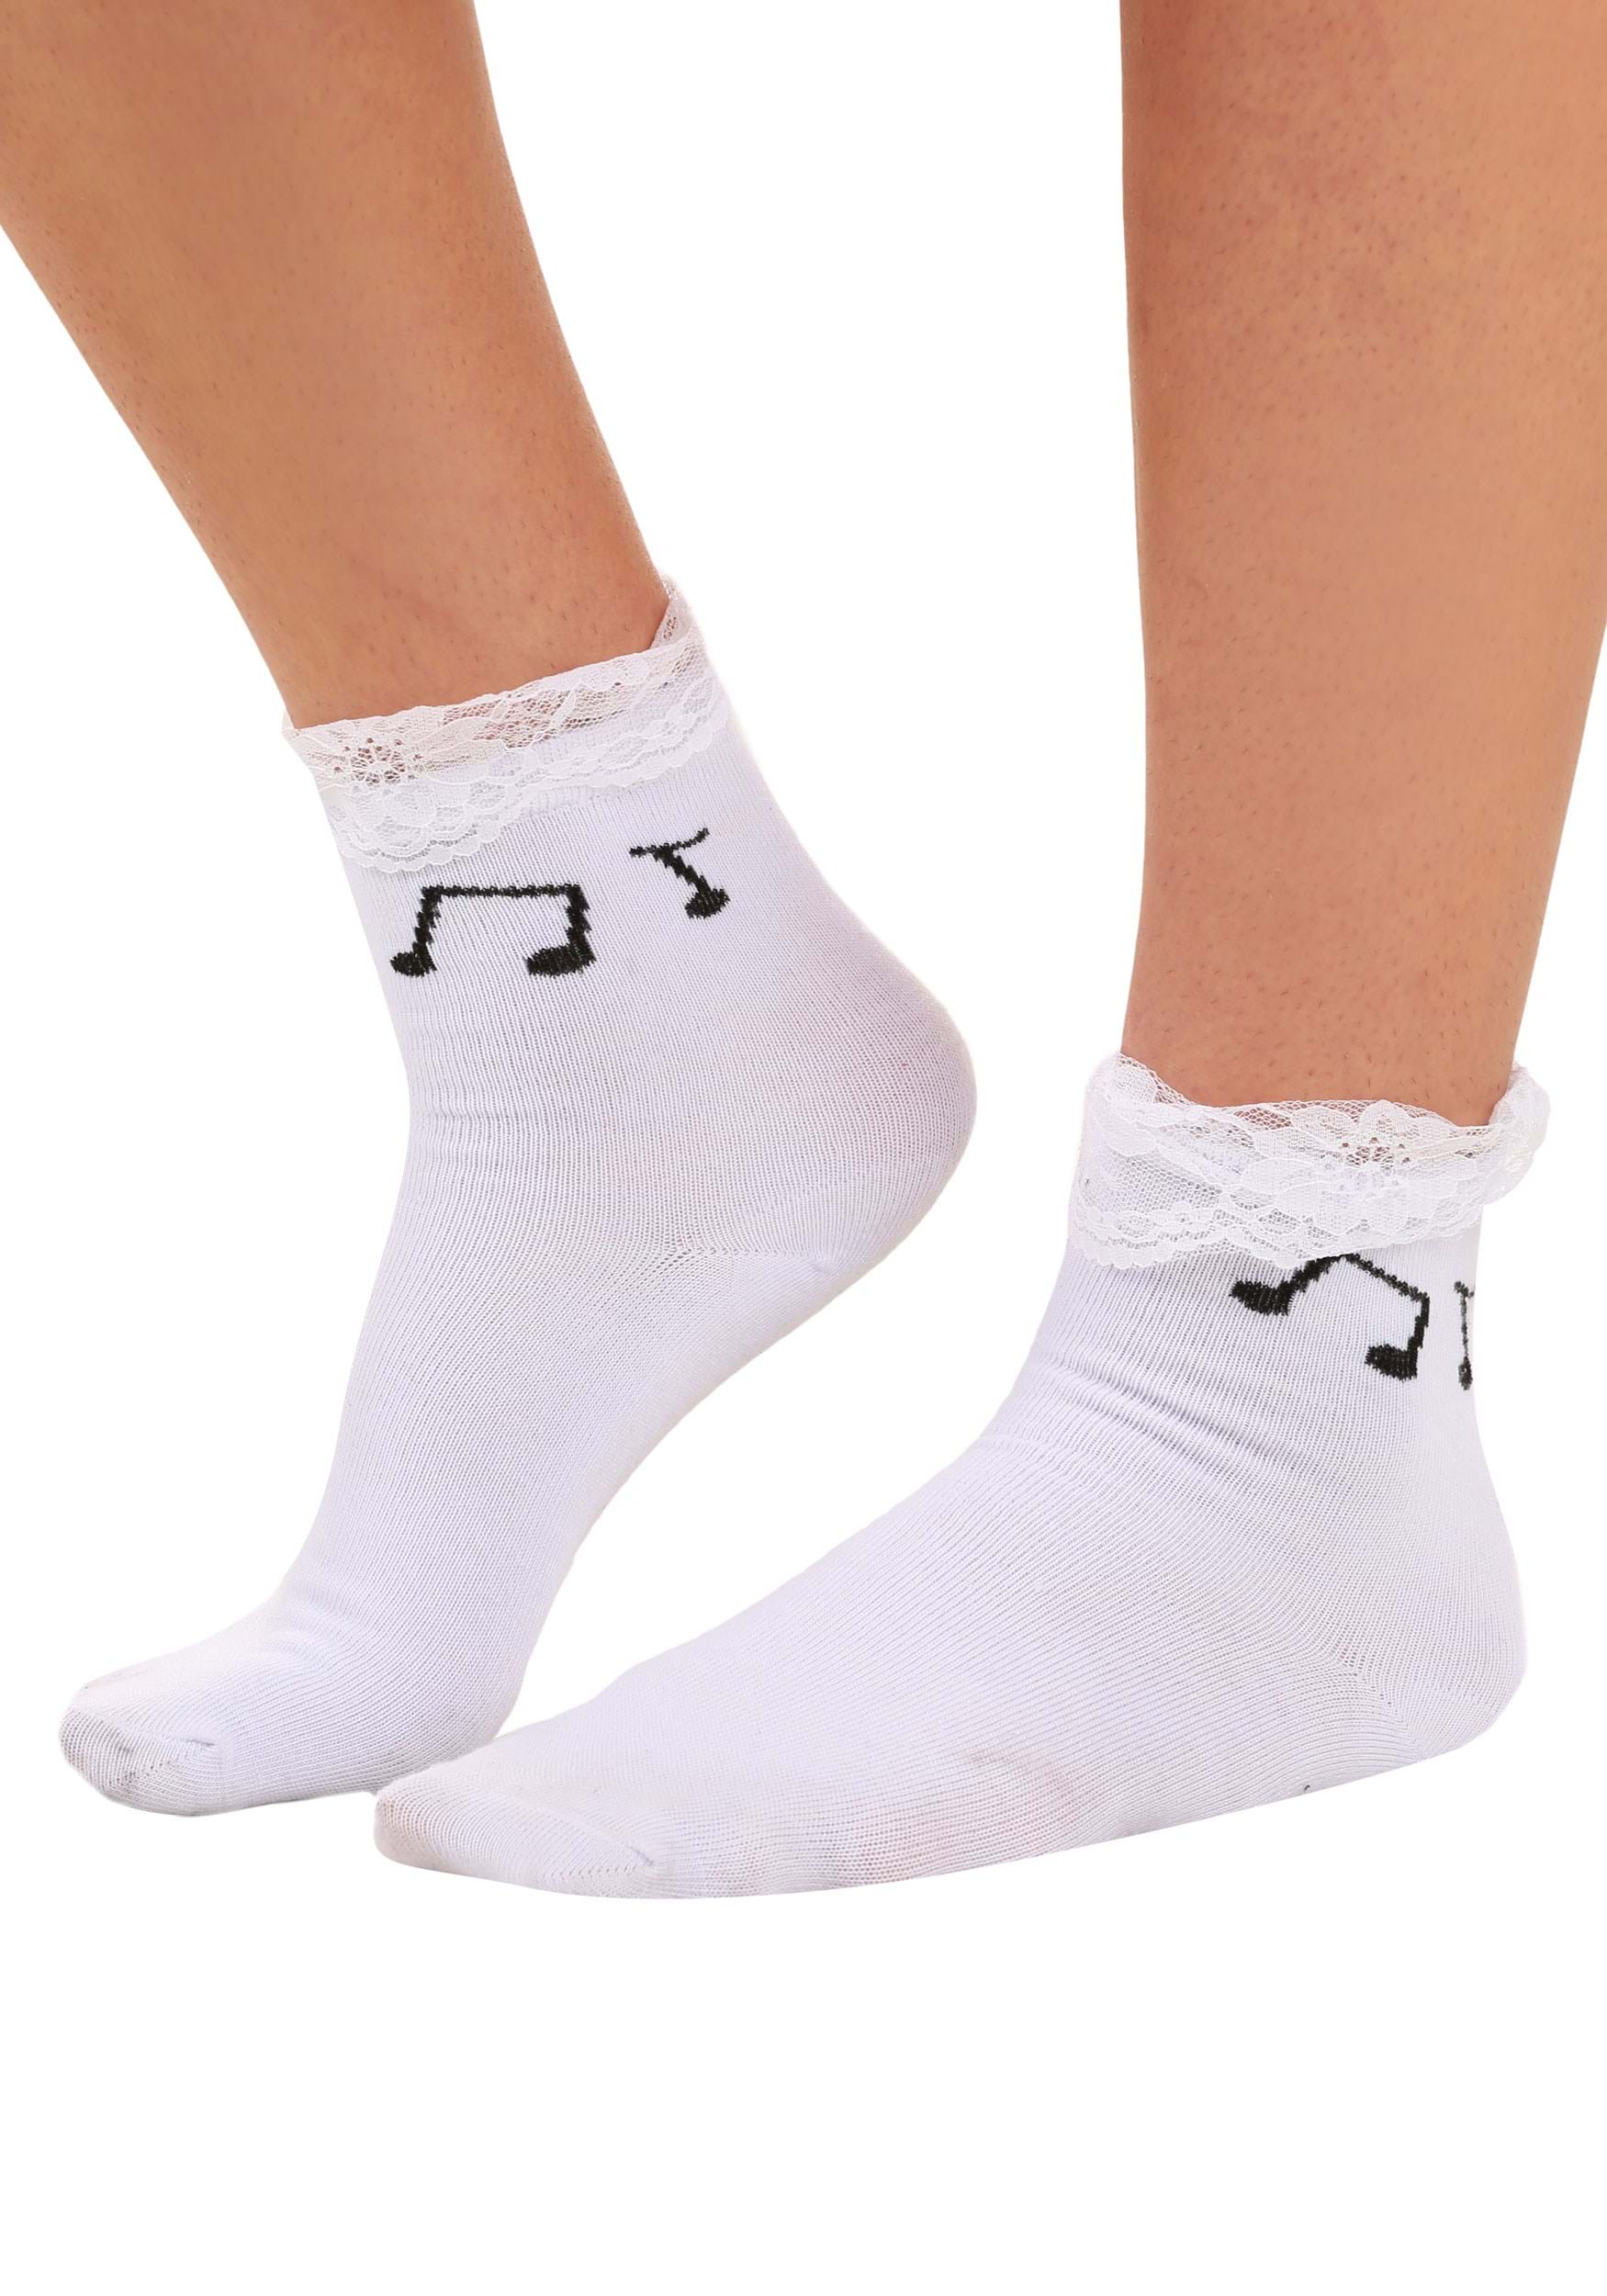 Plus Size Sock Hop Kit For Women